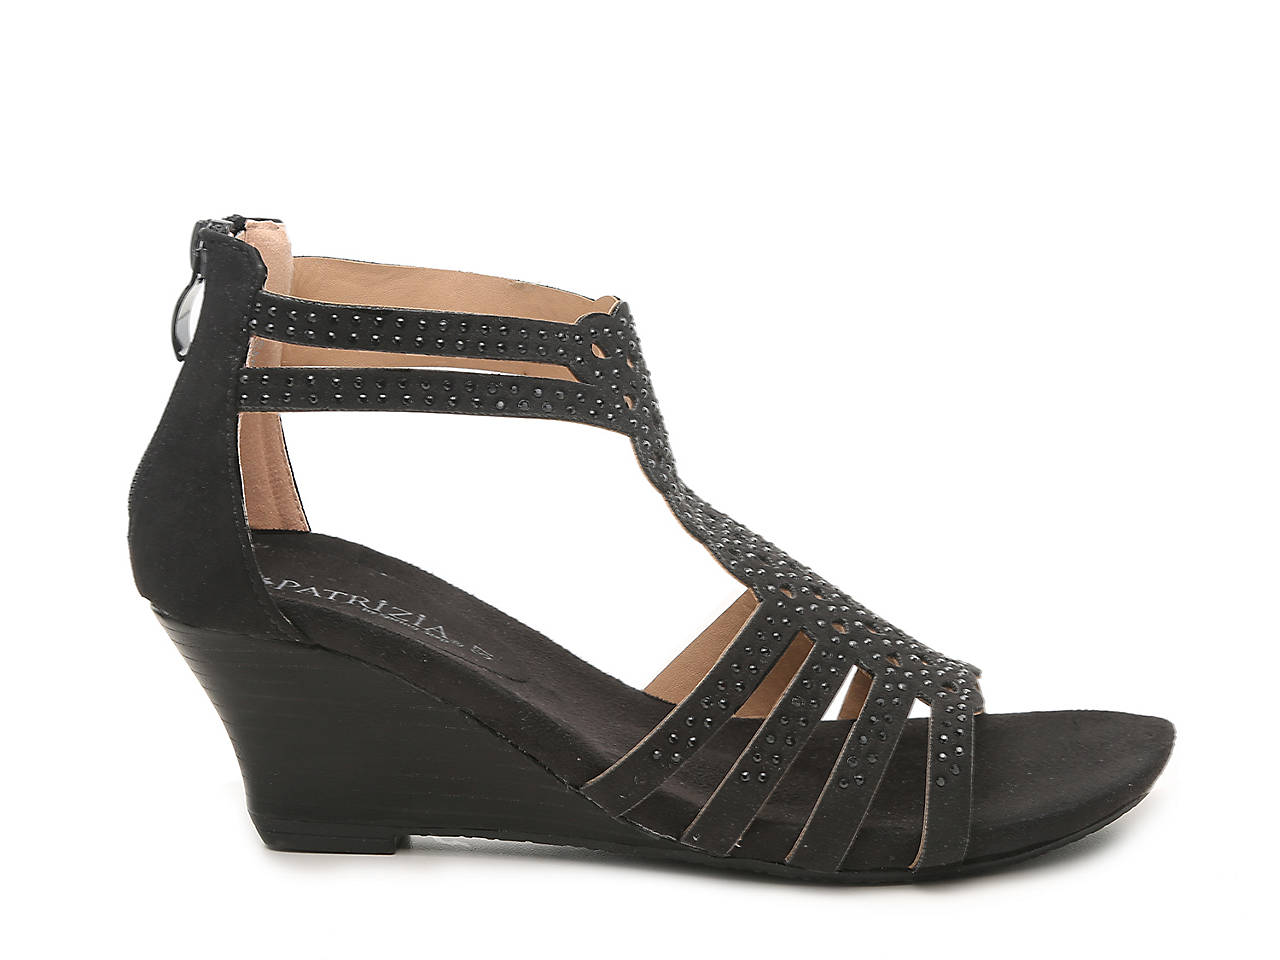 Patrizia by Spring Step Sagebrush Wedge Sandal Women's Shoes DSW